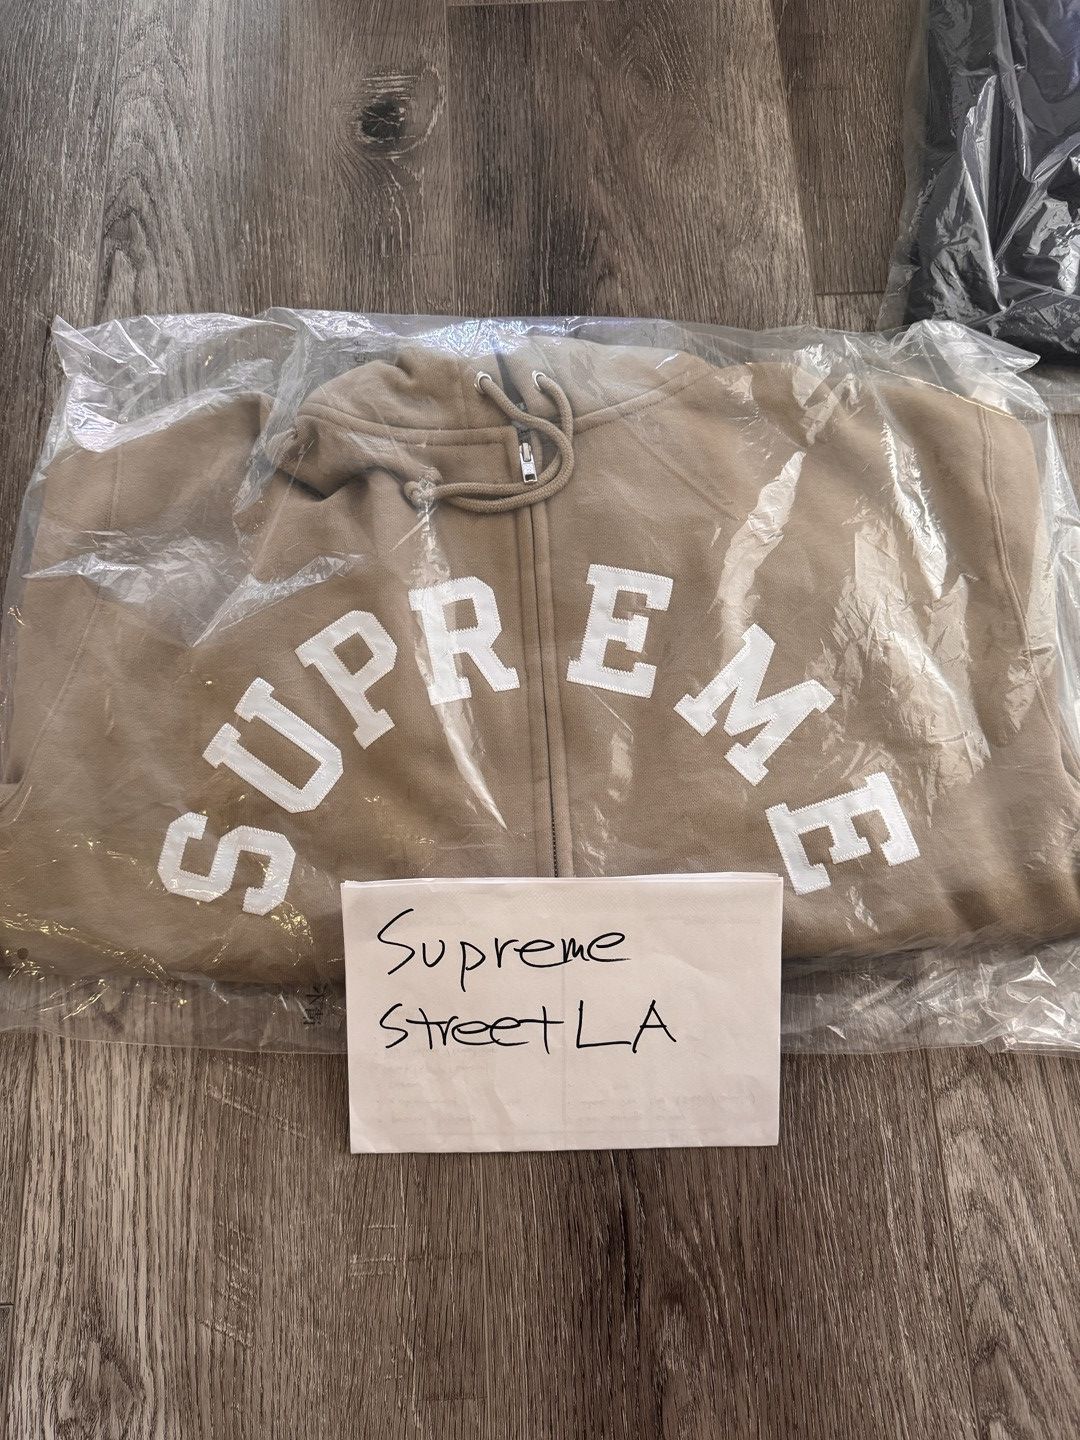 Supreme Supreme Champion Zip Up Hooded Sweatshirt Medium Tan | Grailed